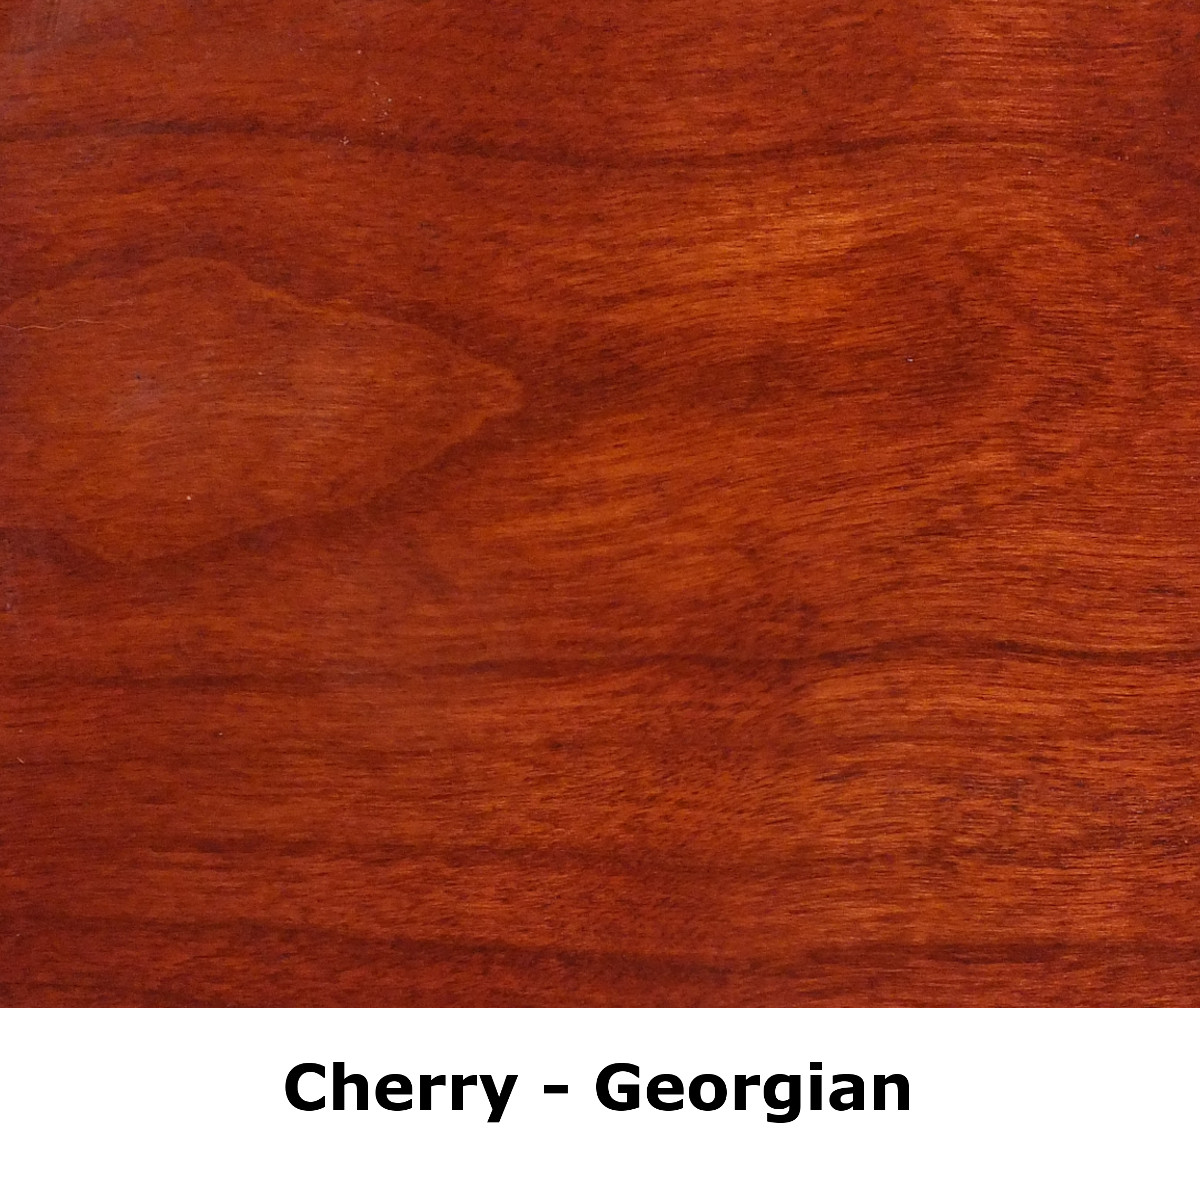 sq cherry gergian redo if mix darker trans.jpeg